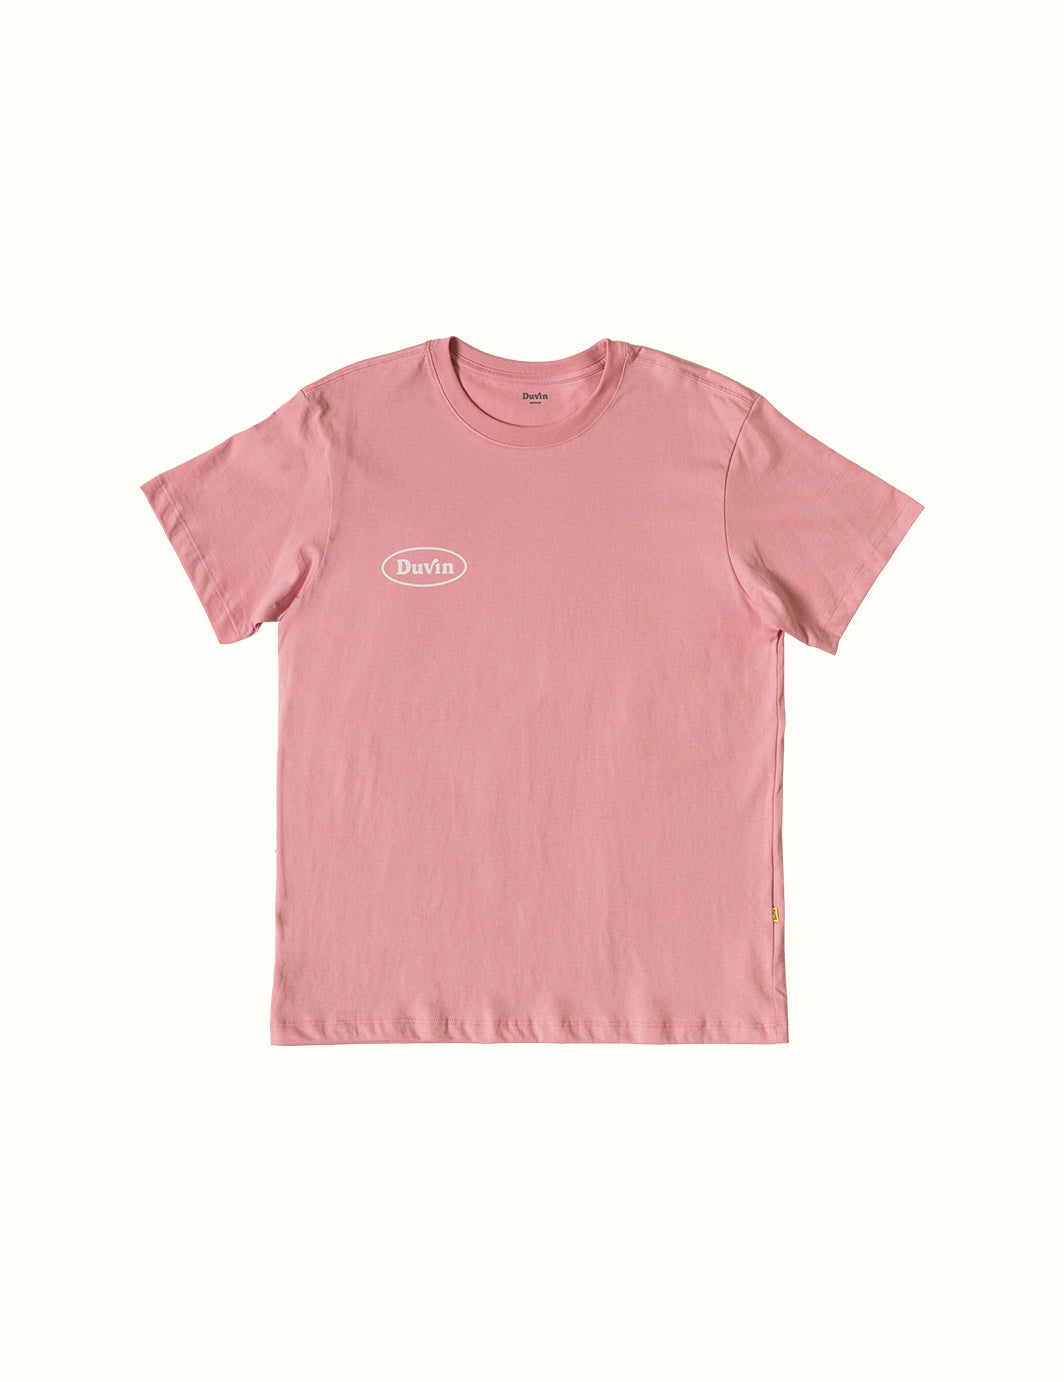 Oval Tee - Pink